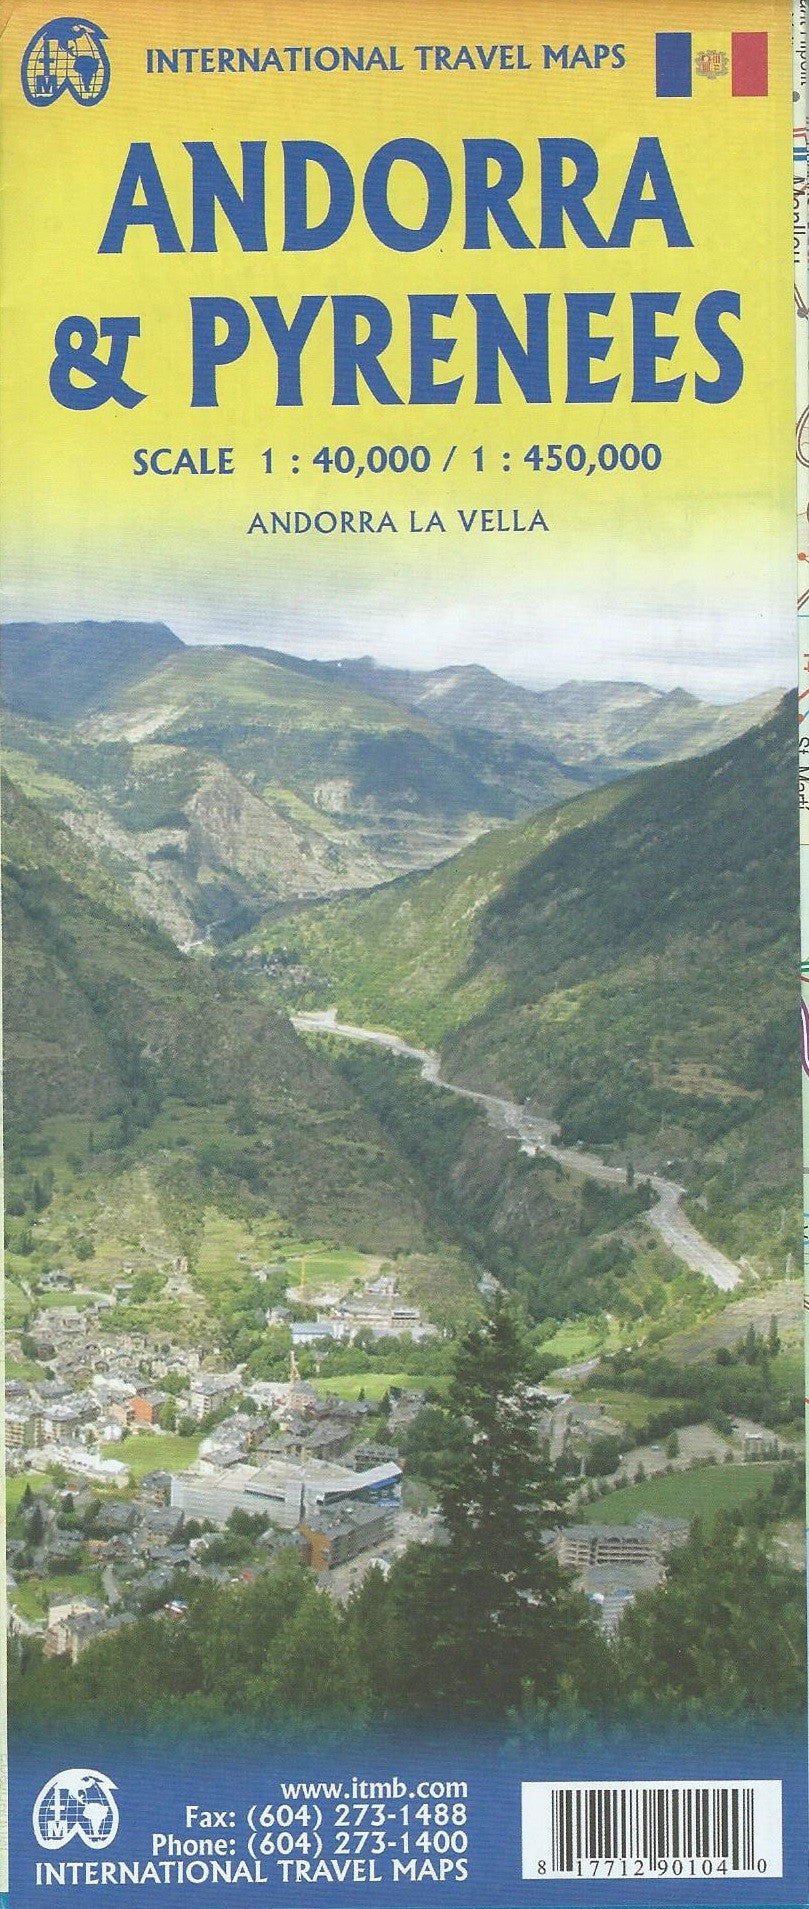 Andorra & Pyrenees ITM Travel Map 2e